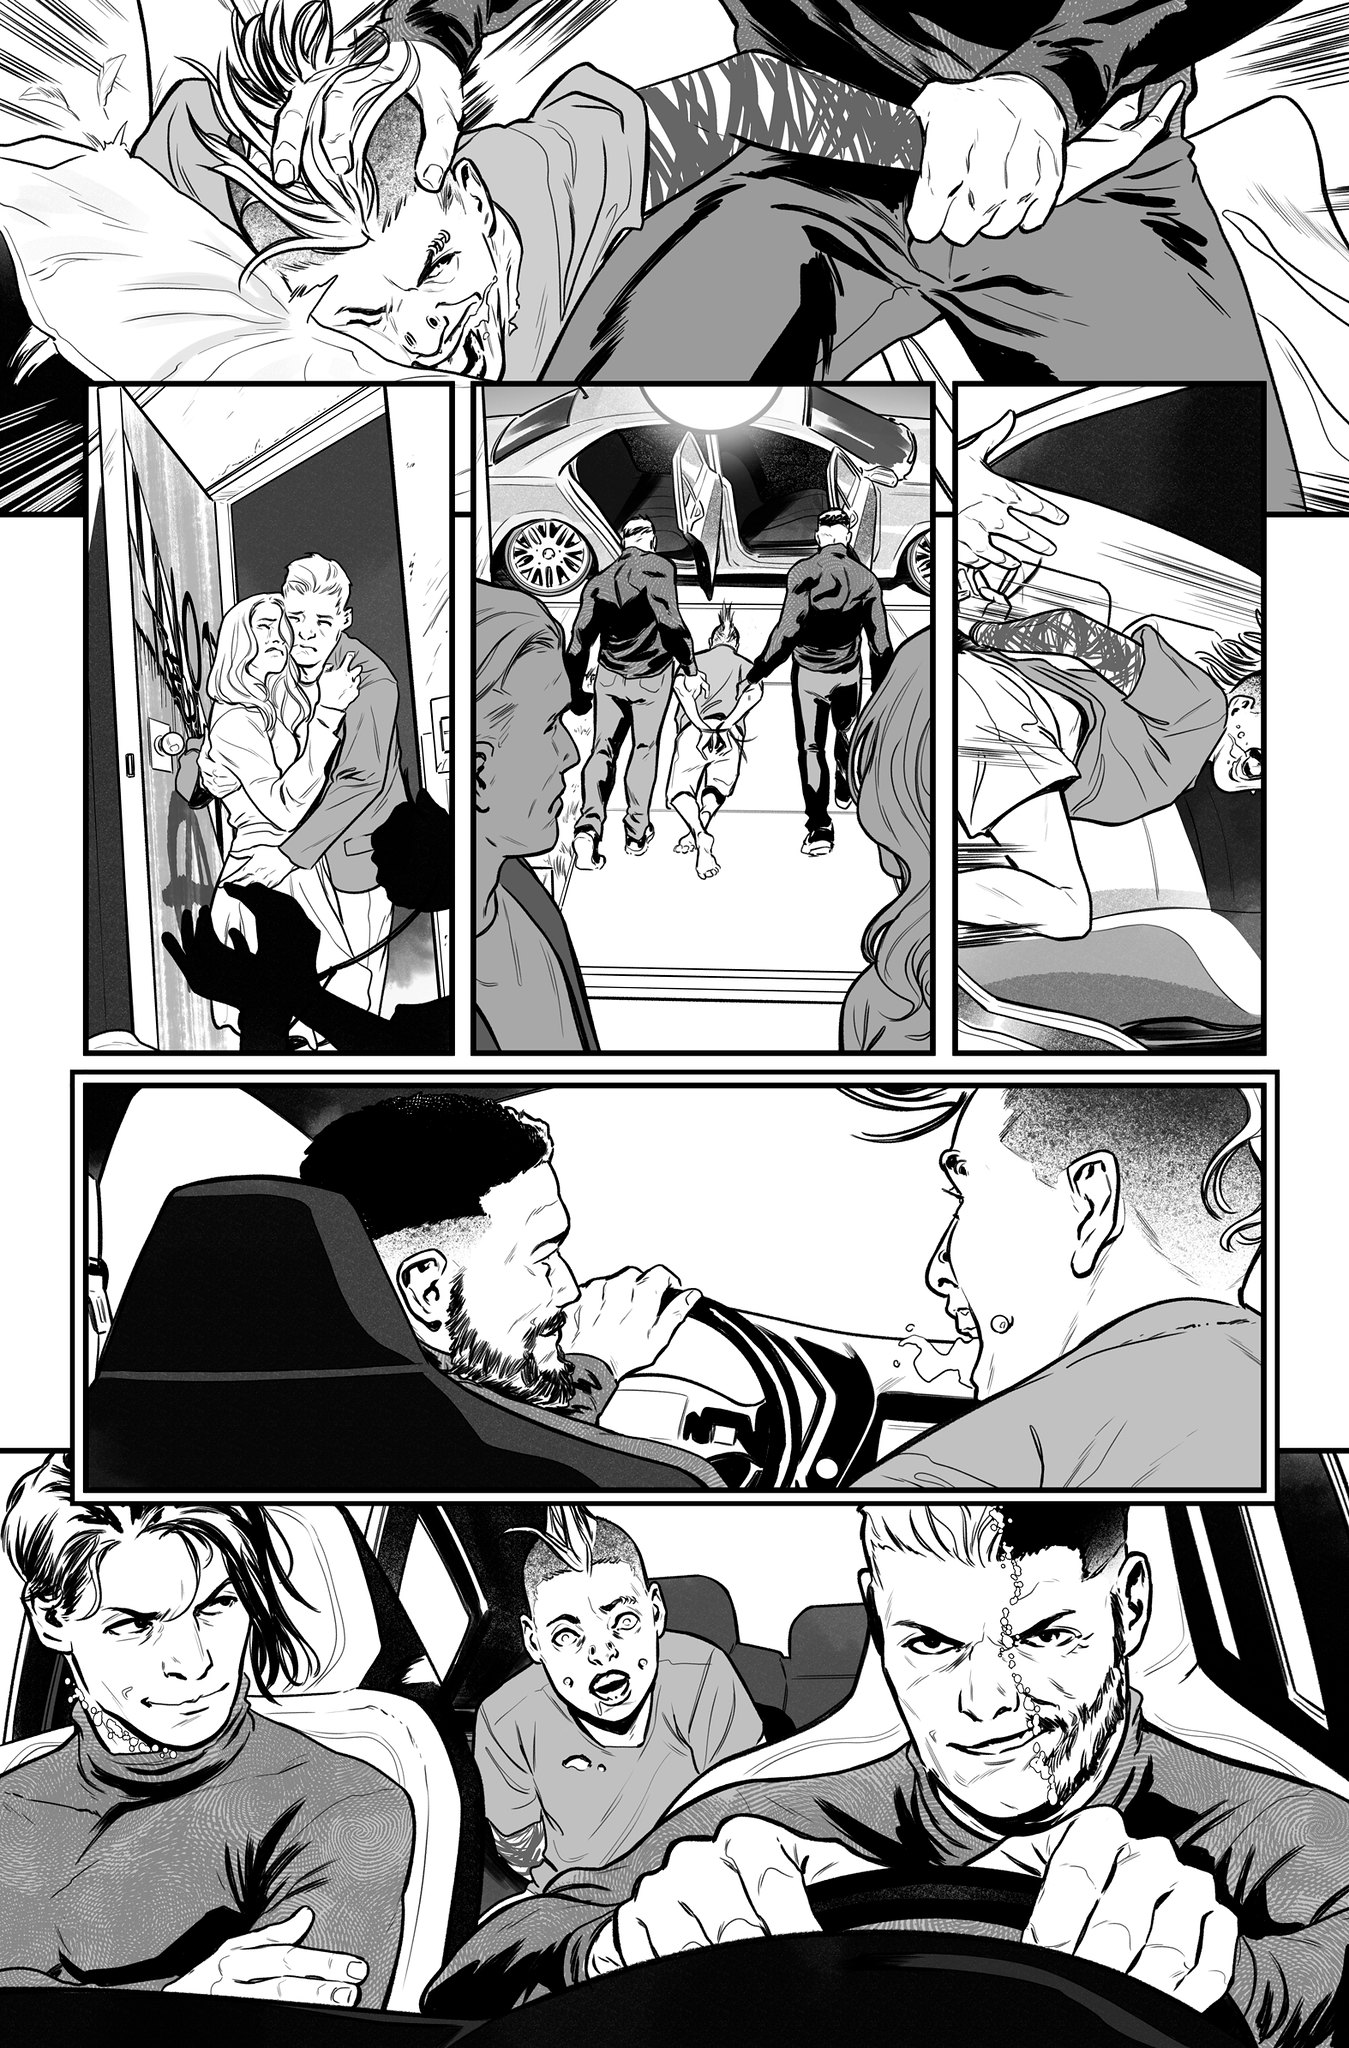 GHOSTRIDER#20_PAGE4_INKS_REV